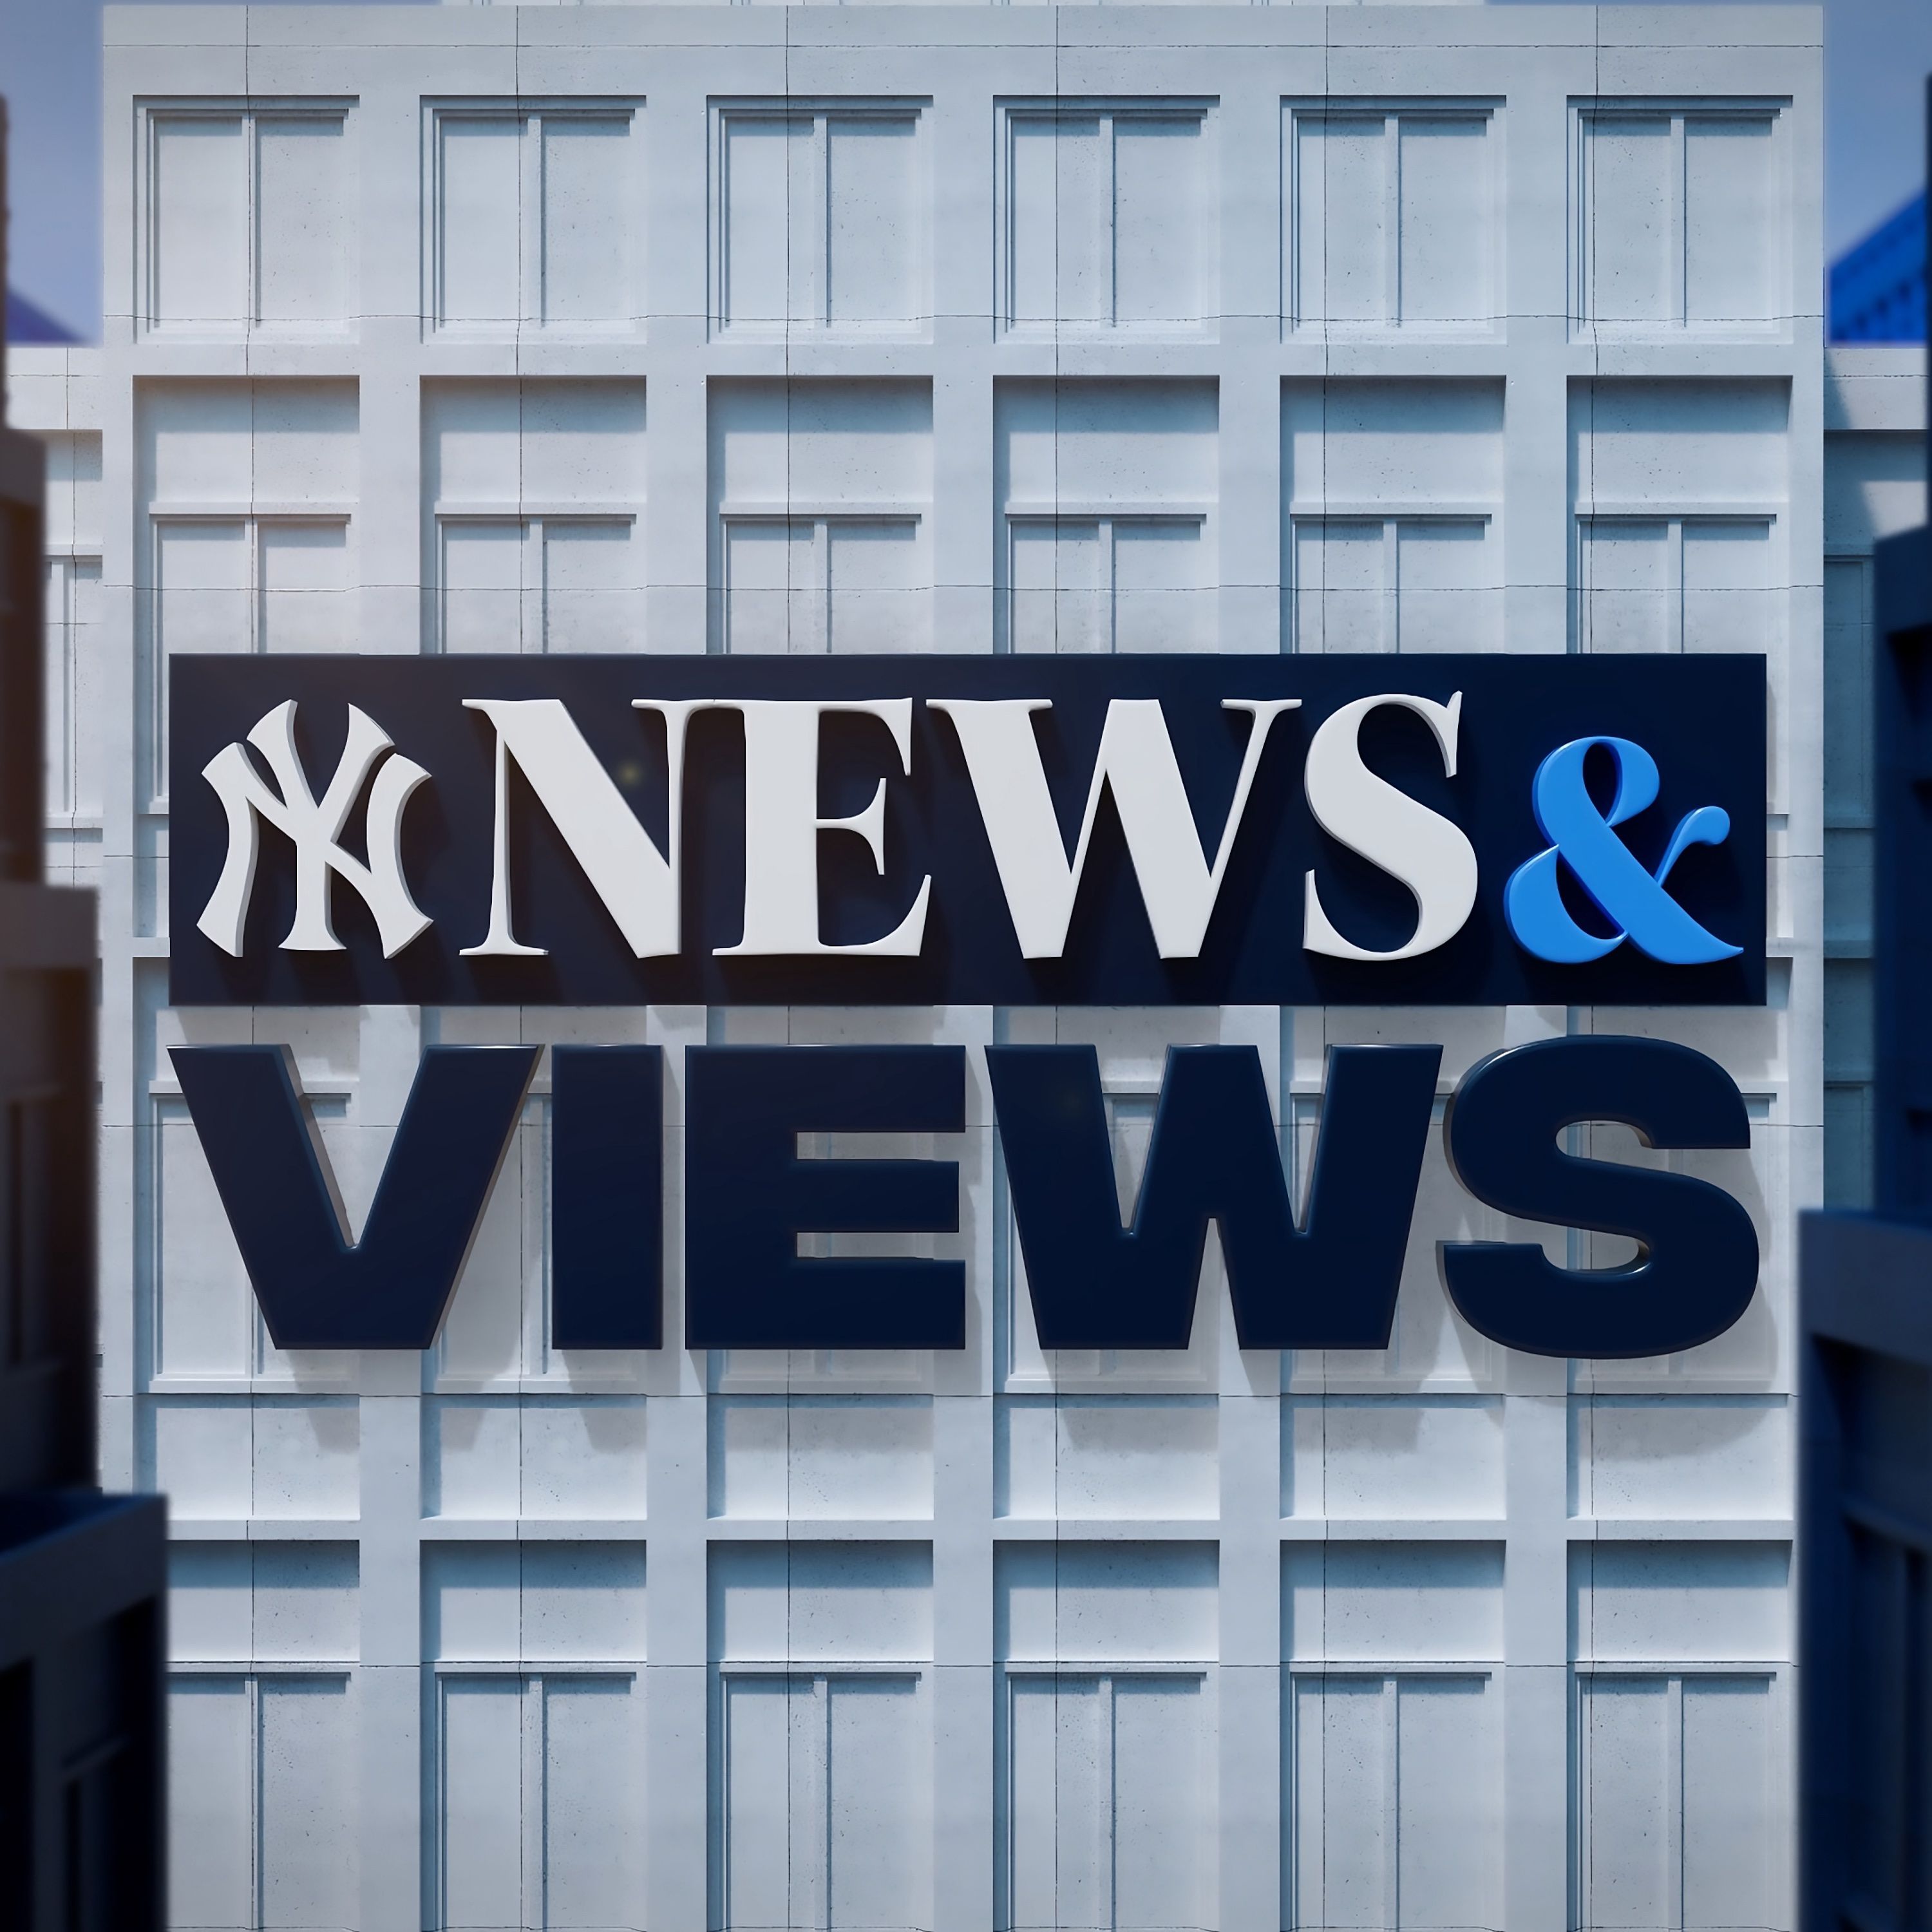 Yankees News & Views